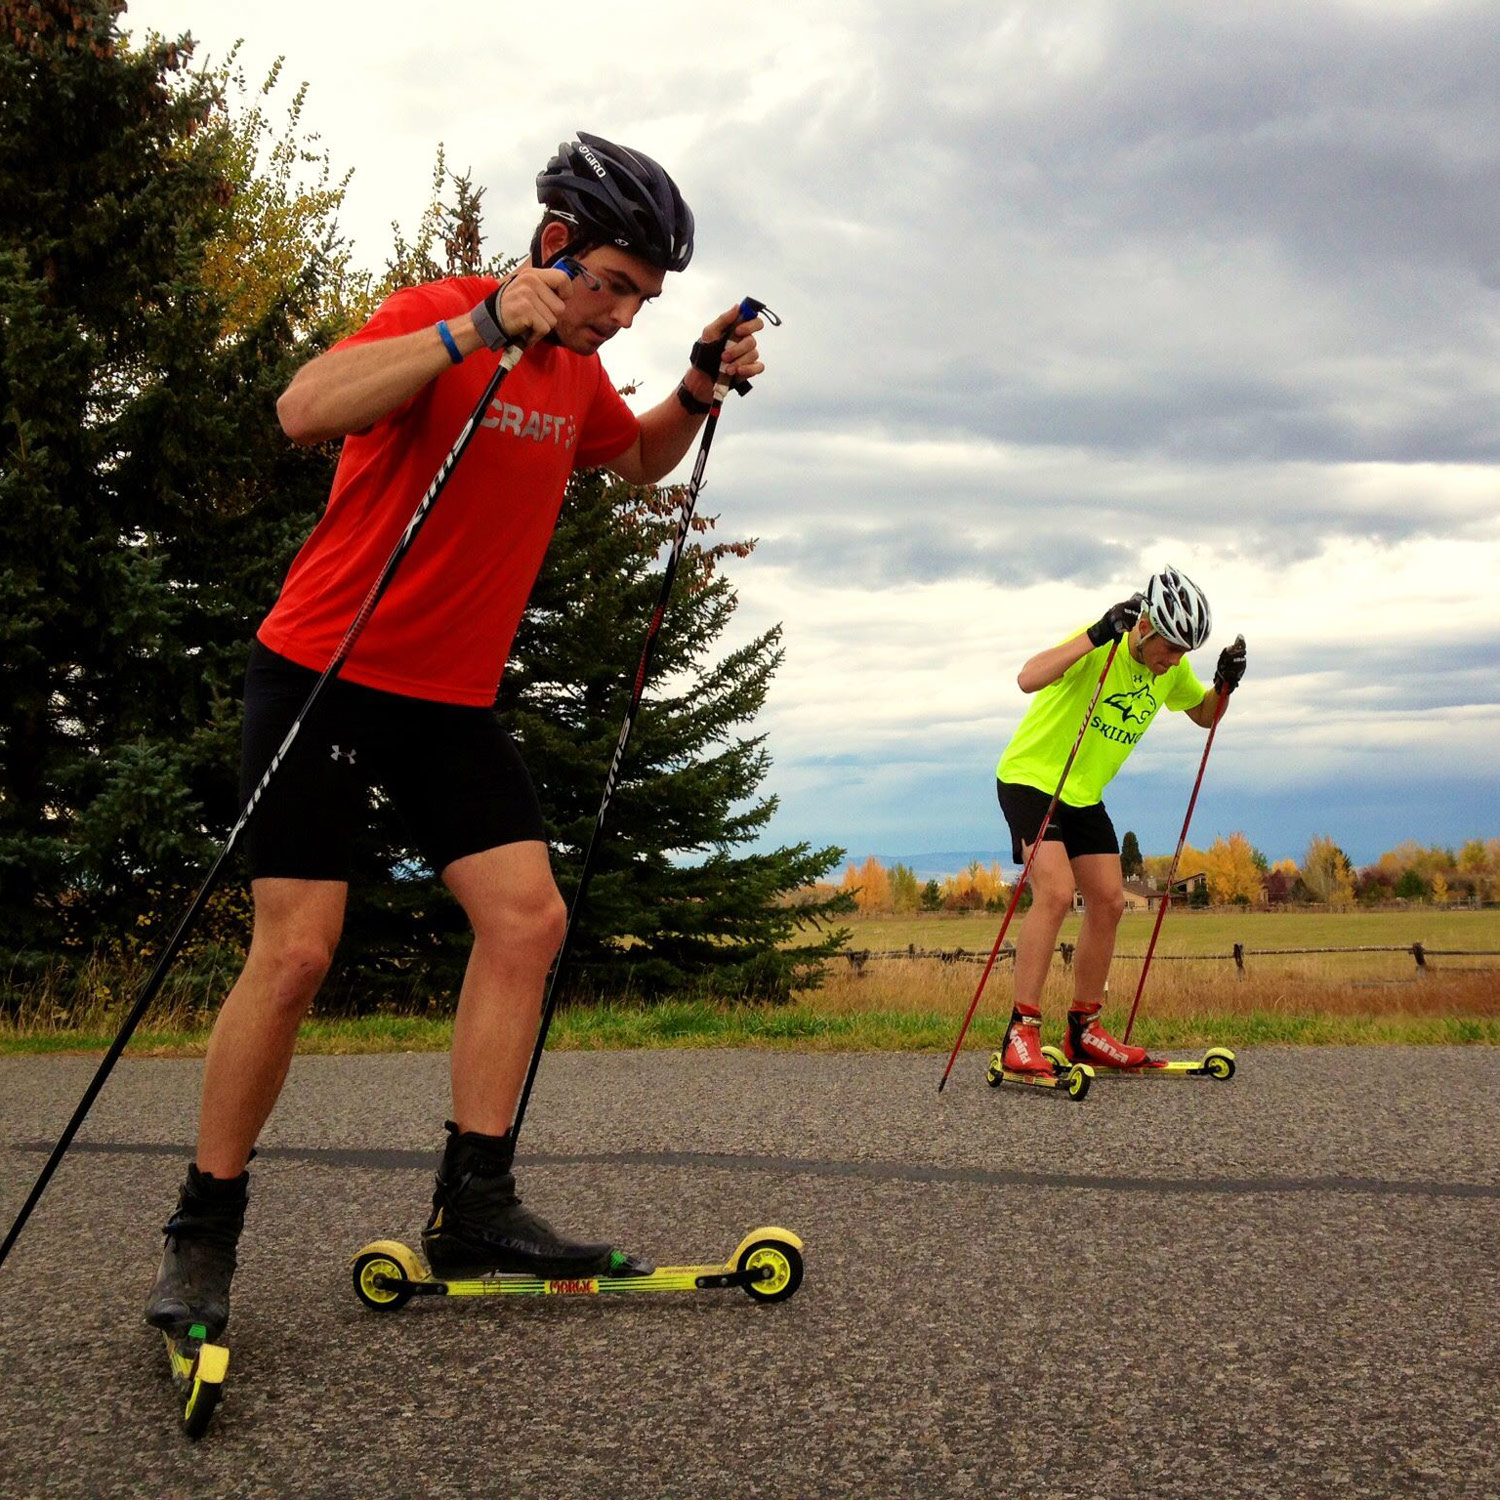 Members of the Montana State University Ski Team head out for a fall rollerski. Credit: MSU Ski Team